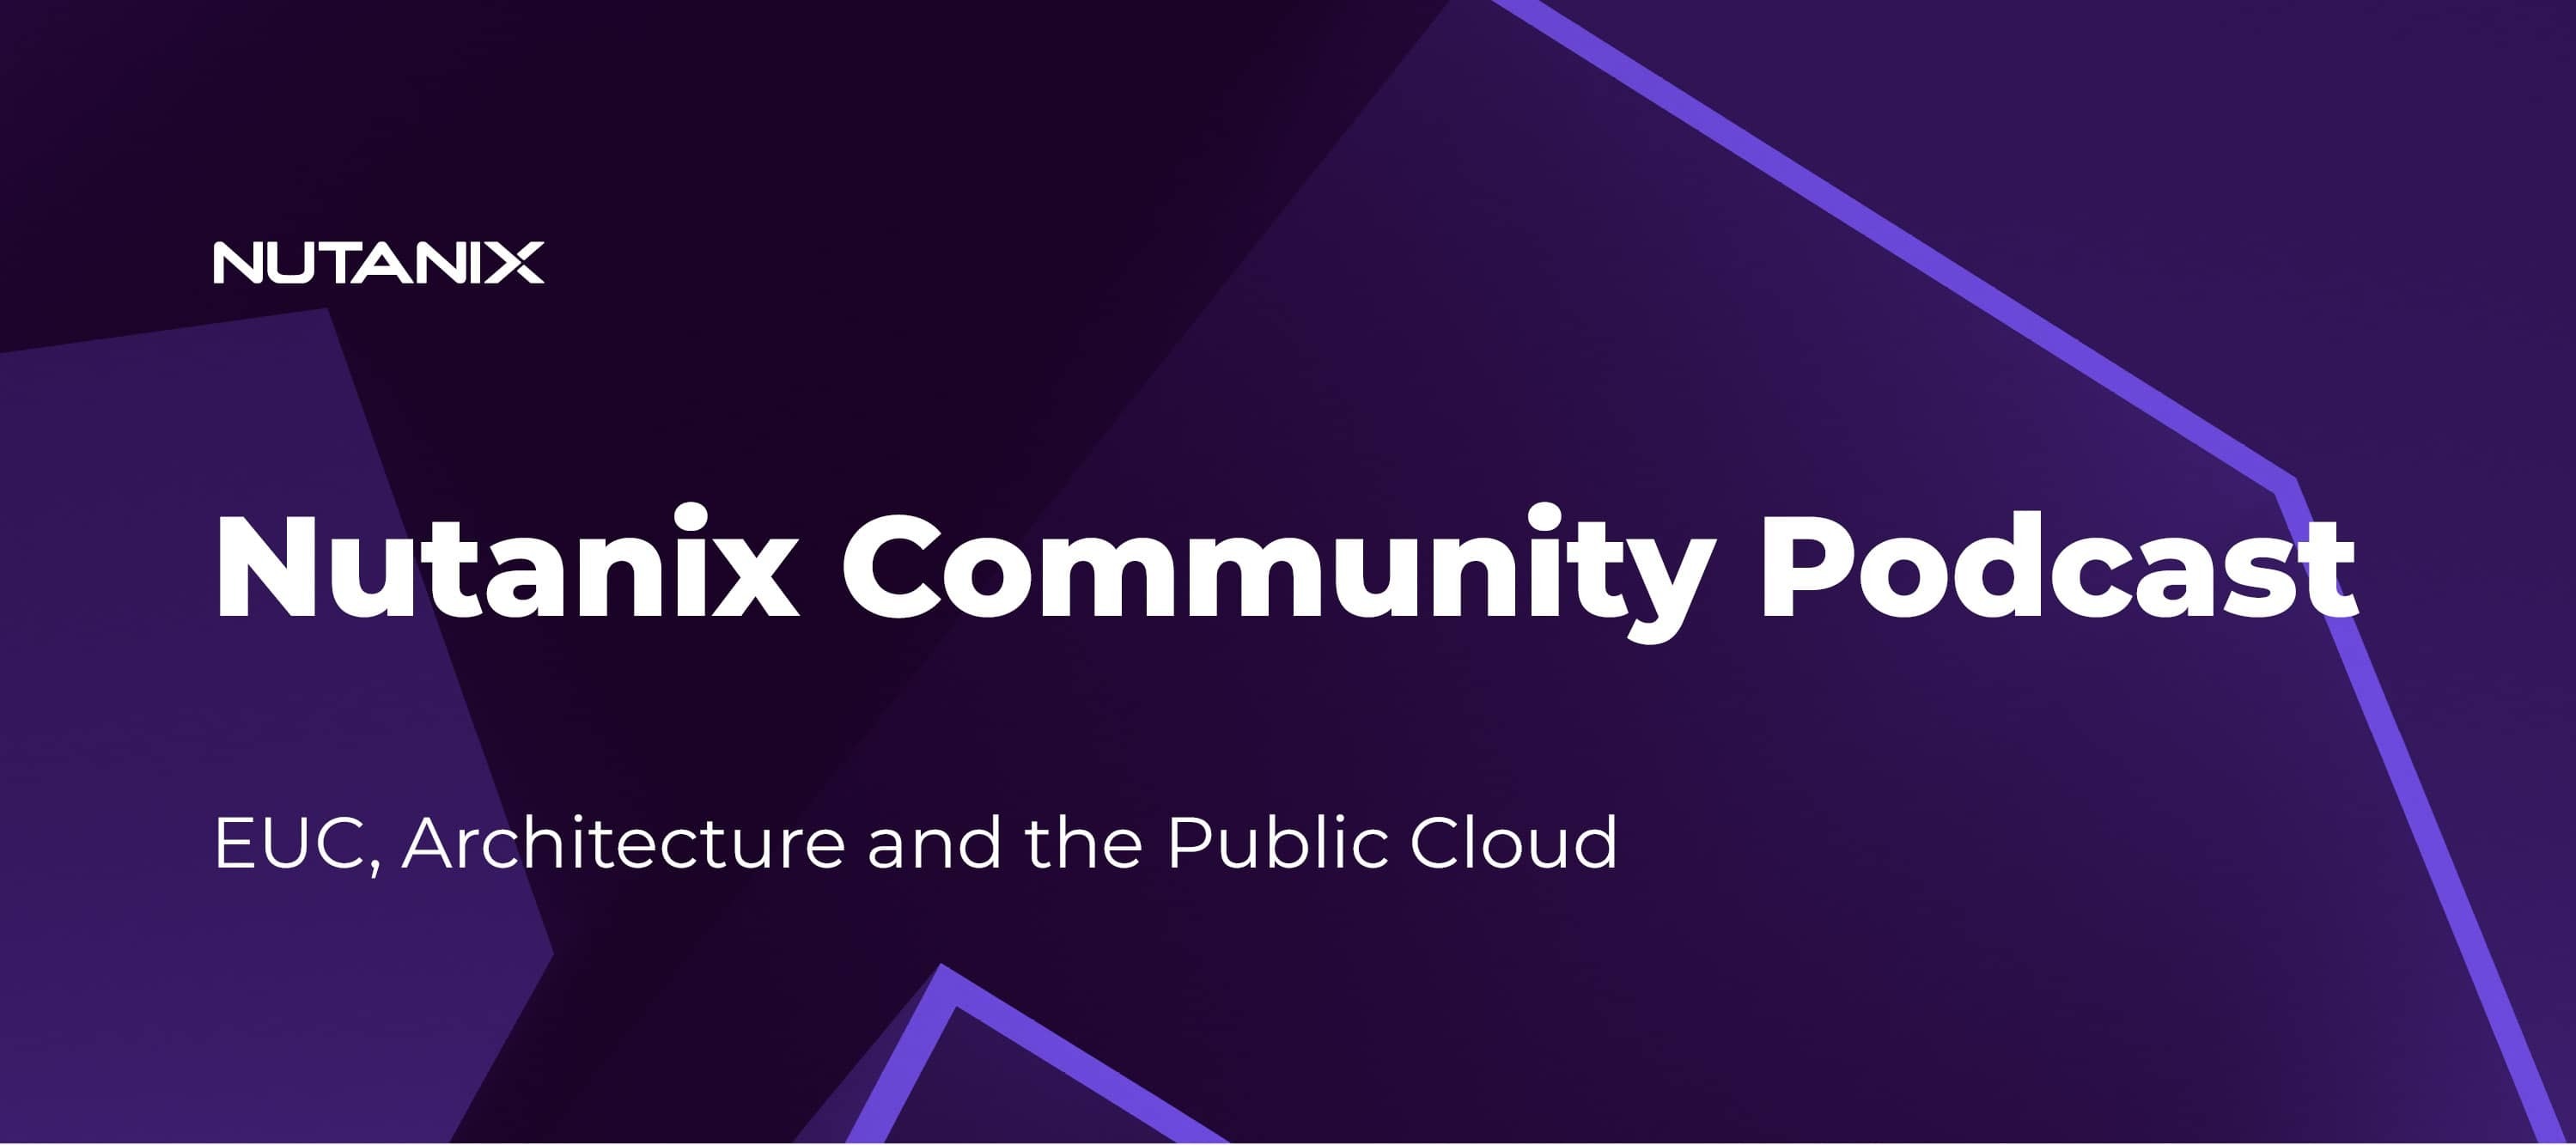 Nutanix Community Podcast: EUC, Architecture and the Public Cloud